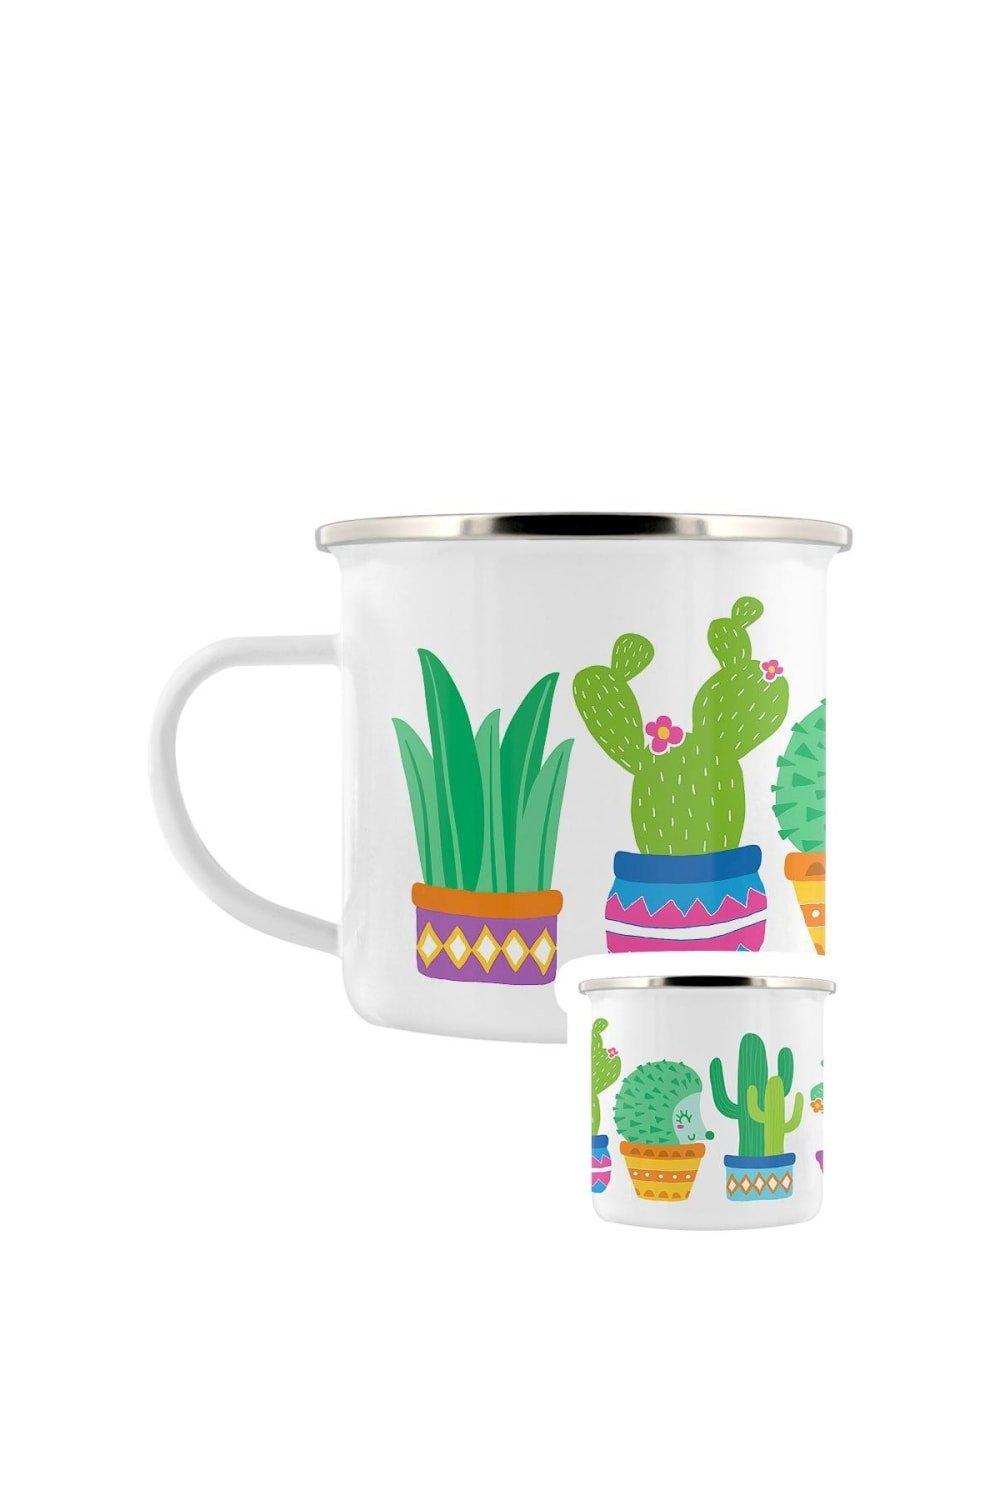 Photos - Mug / Cup Hedgehog Cacti Enamel Mug